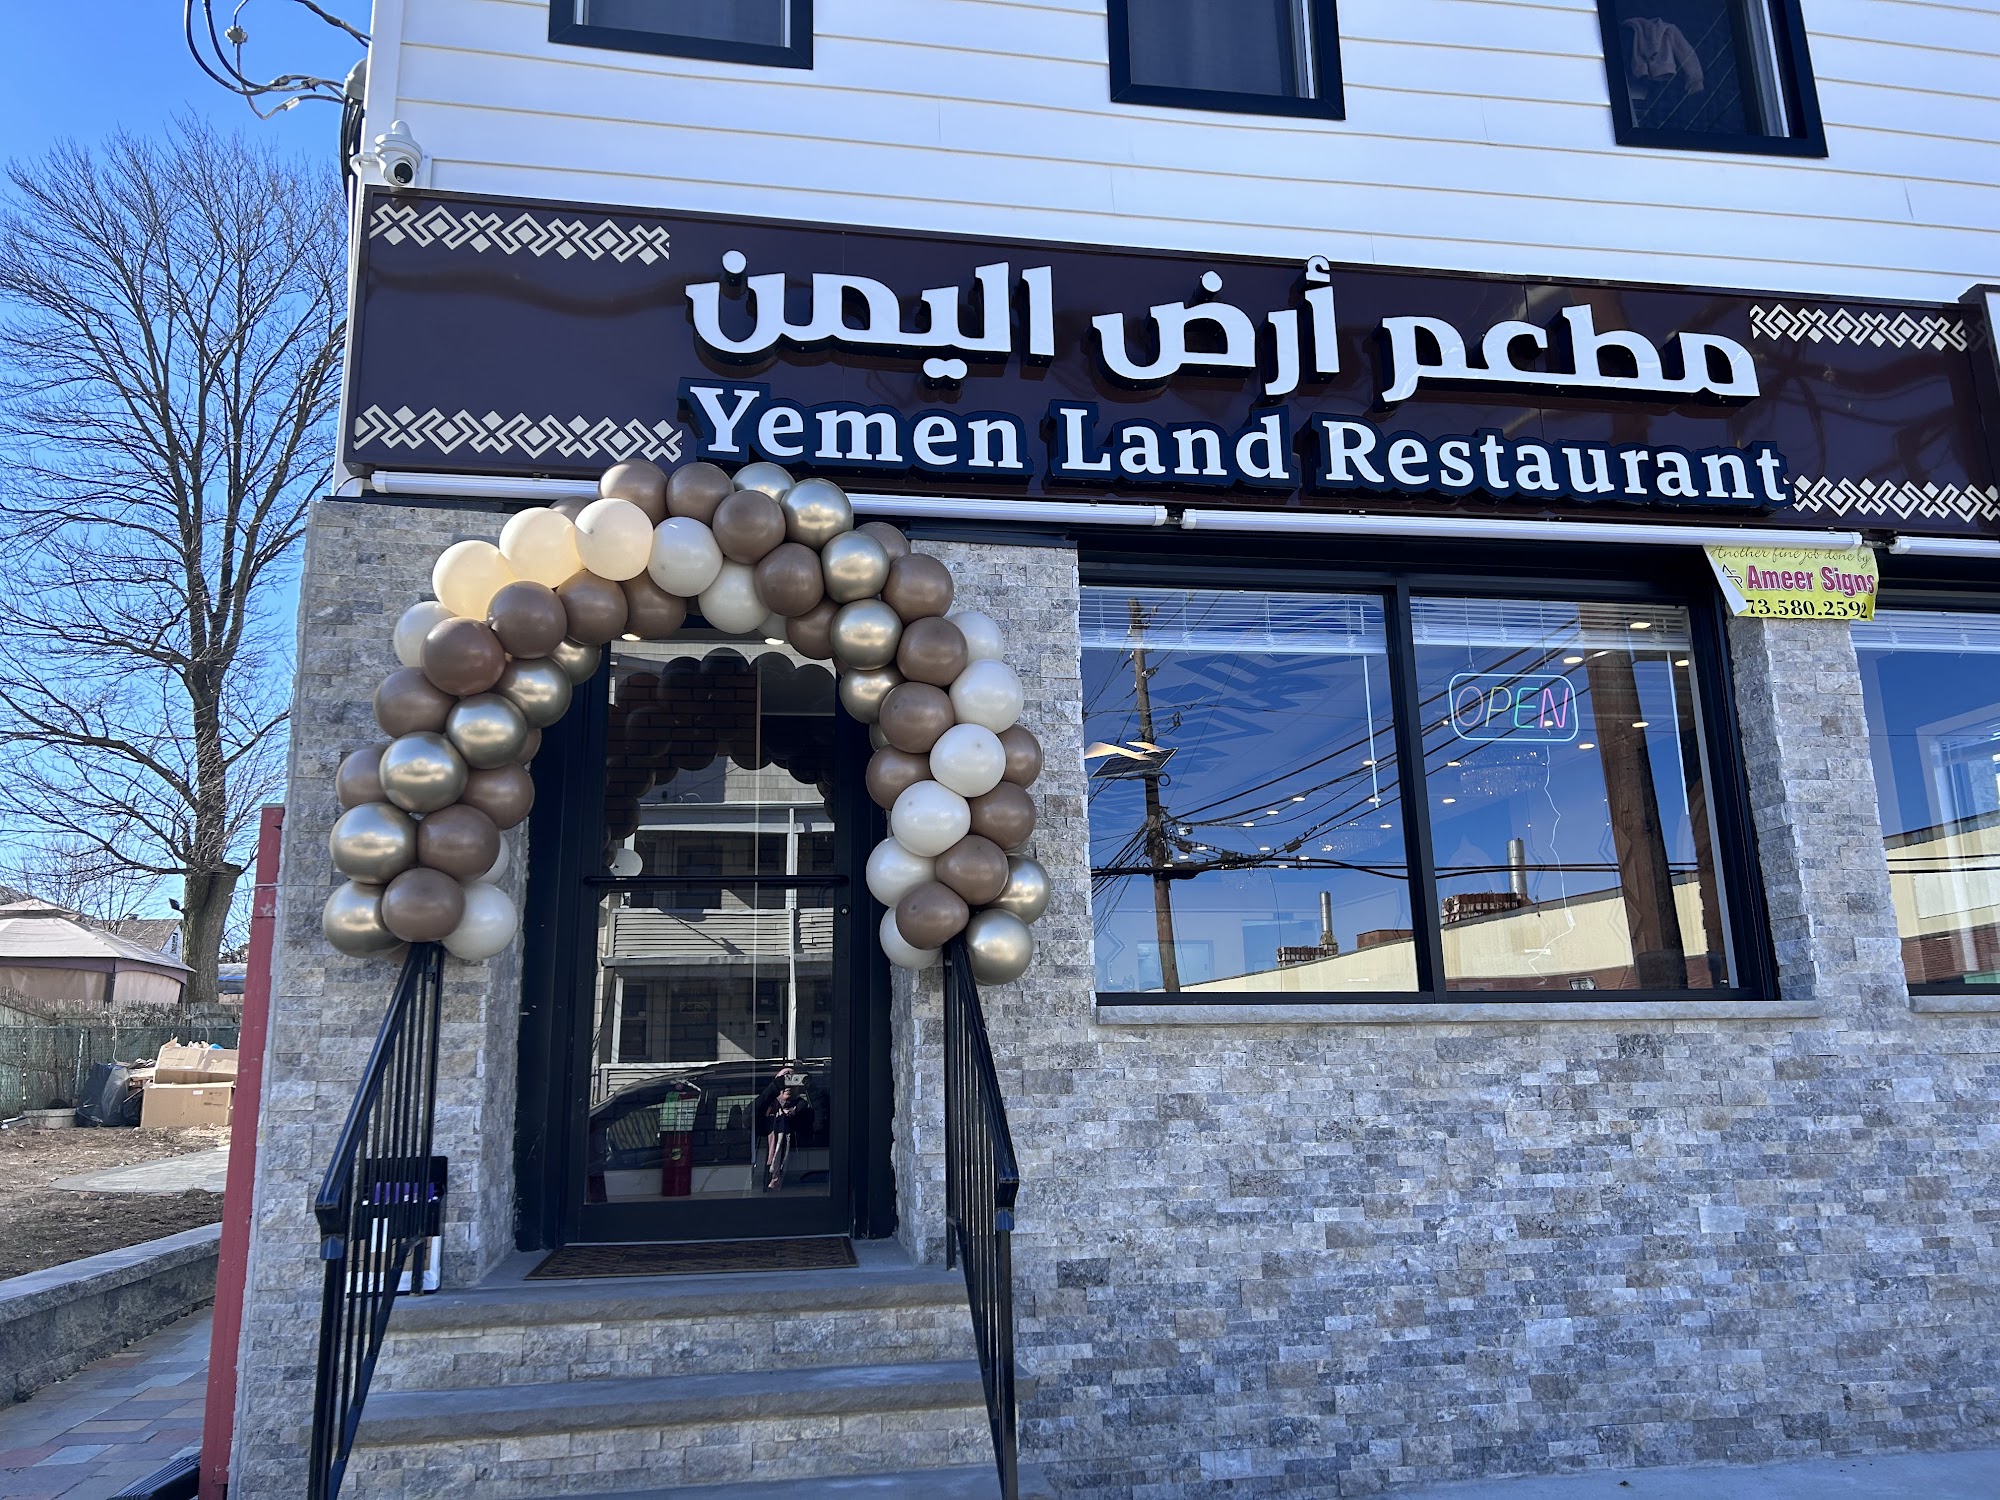 Yemen Land Restaurant 304 Getty Ave, Paterson, NJ 07503